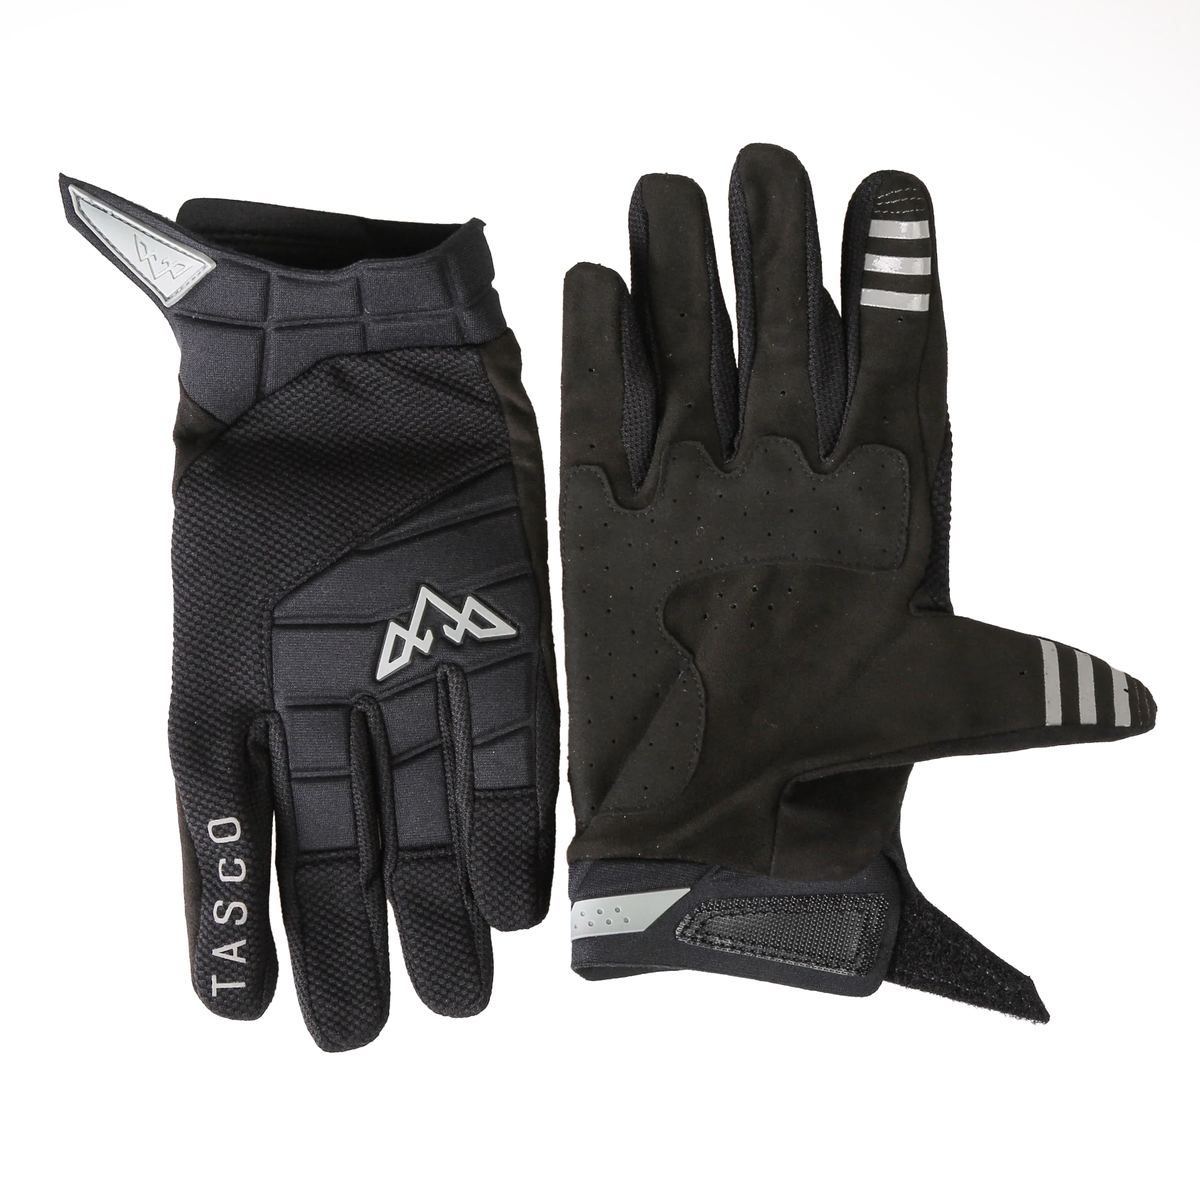 Pathfinder MTB Gloves - Gray